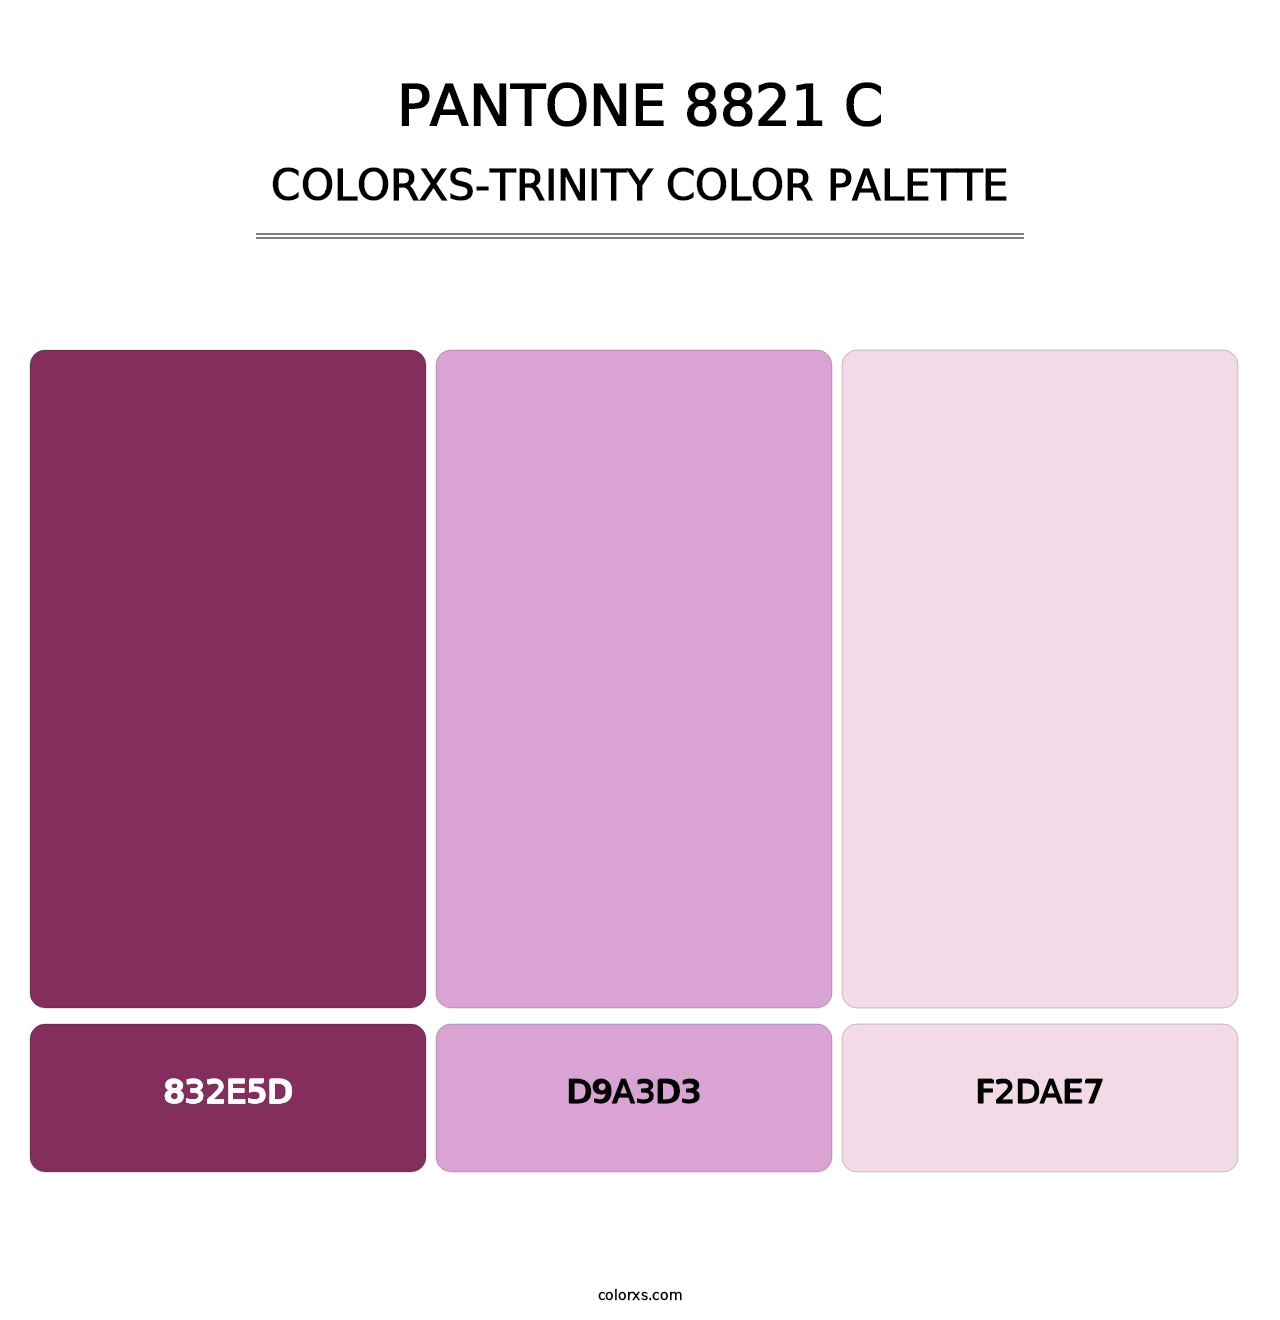 PANTONE 8821 C - Colorxs Trinity Palette